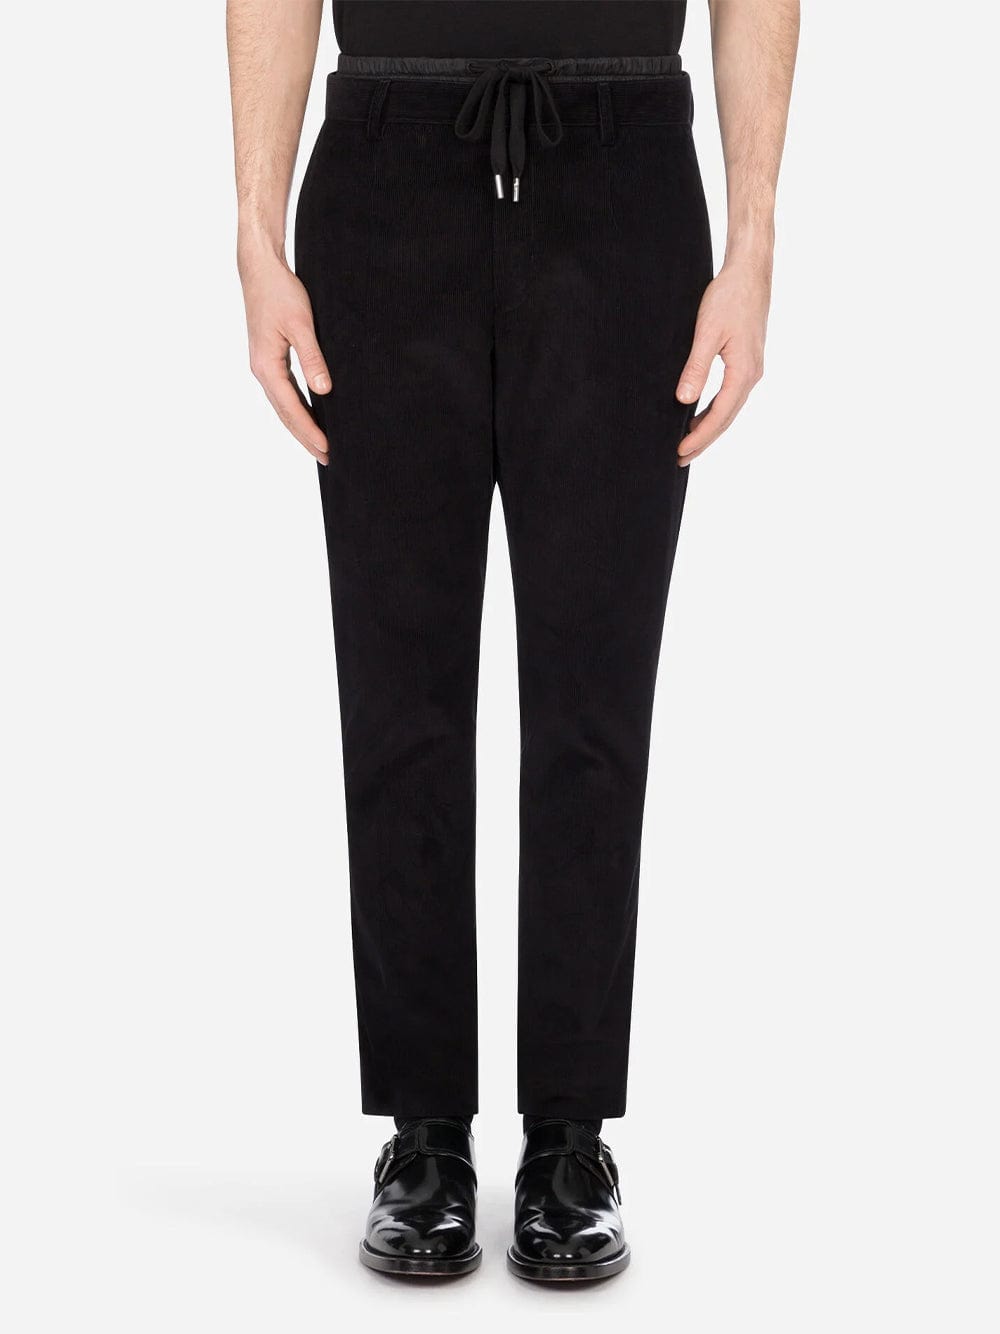 DeHolifer Men's Pants Cotton Slim Fit Casual Lightweight Elastic Waist Pants  Straight Leg Drawstring Trousers Gray 2XL - Walmart.com